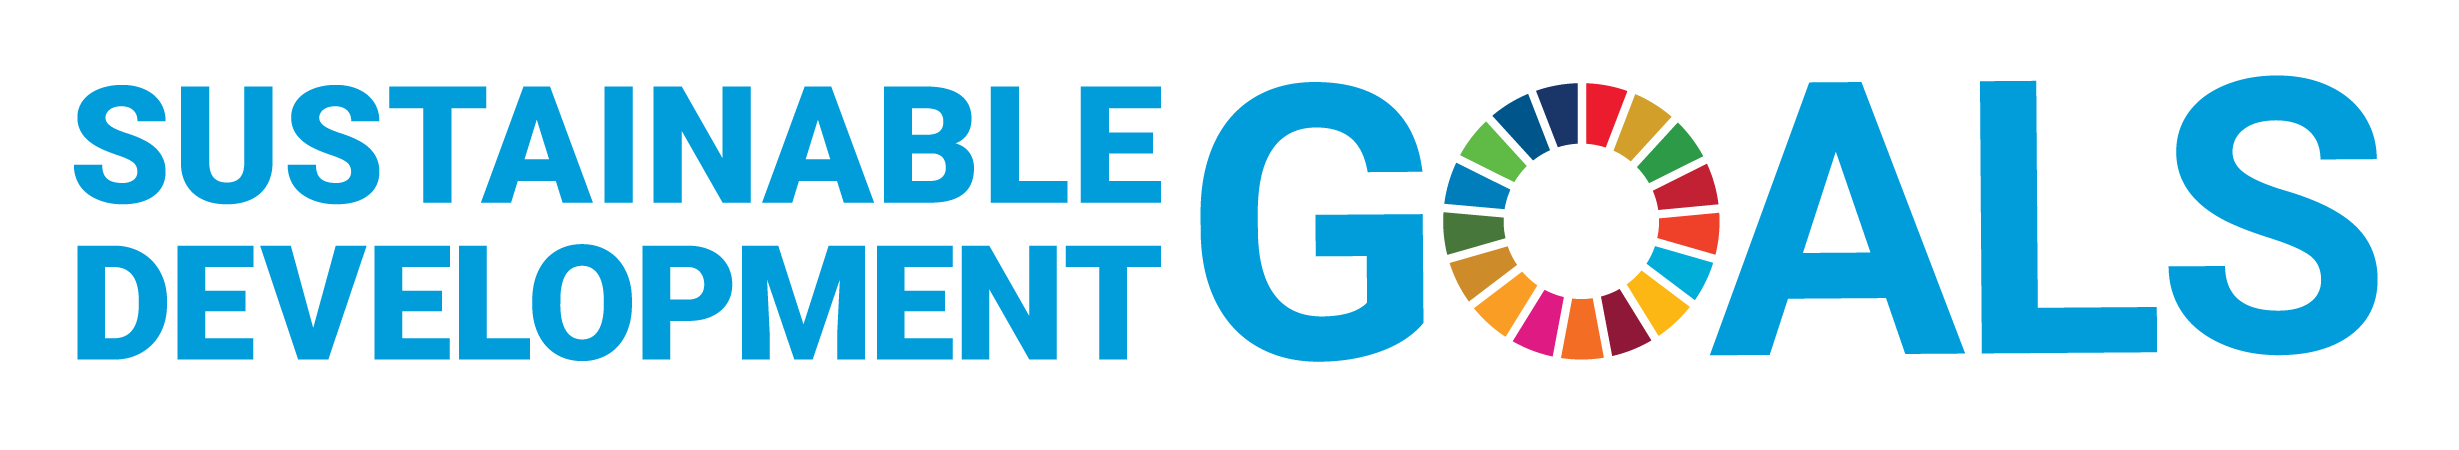 SDG emblem